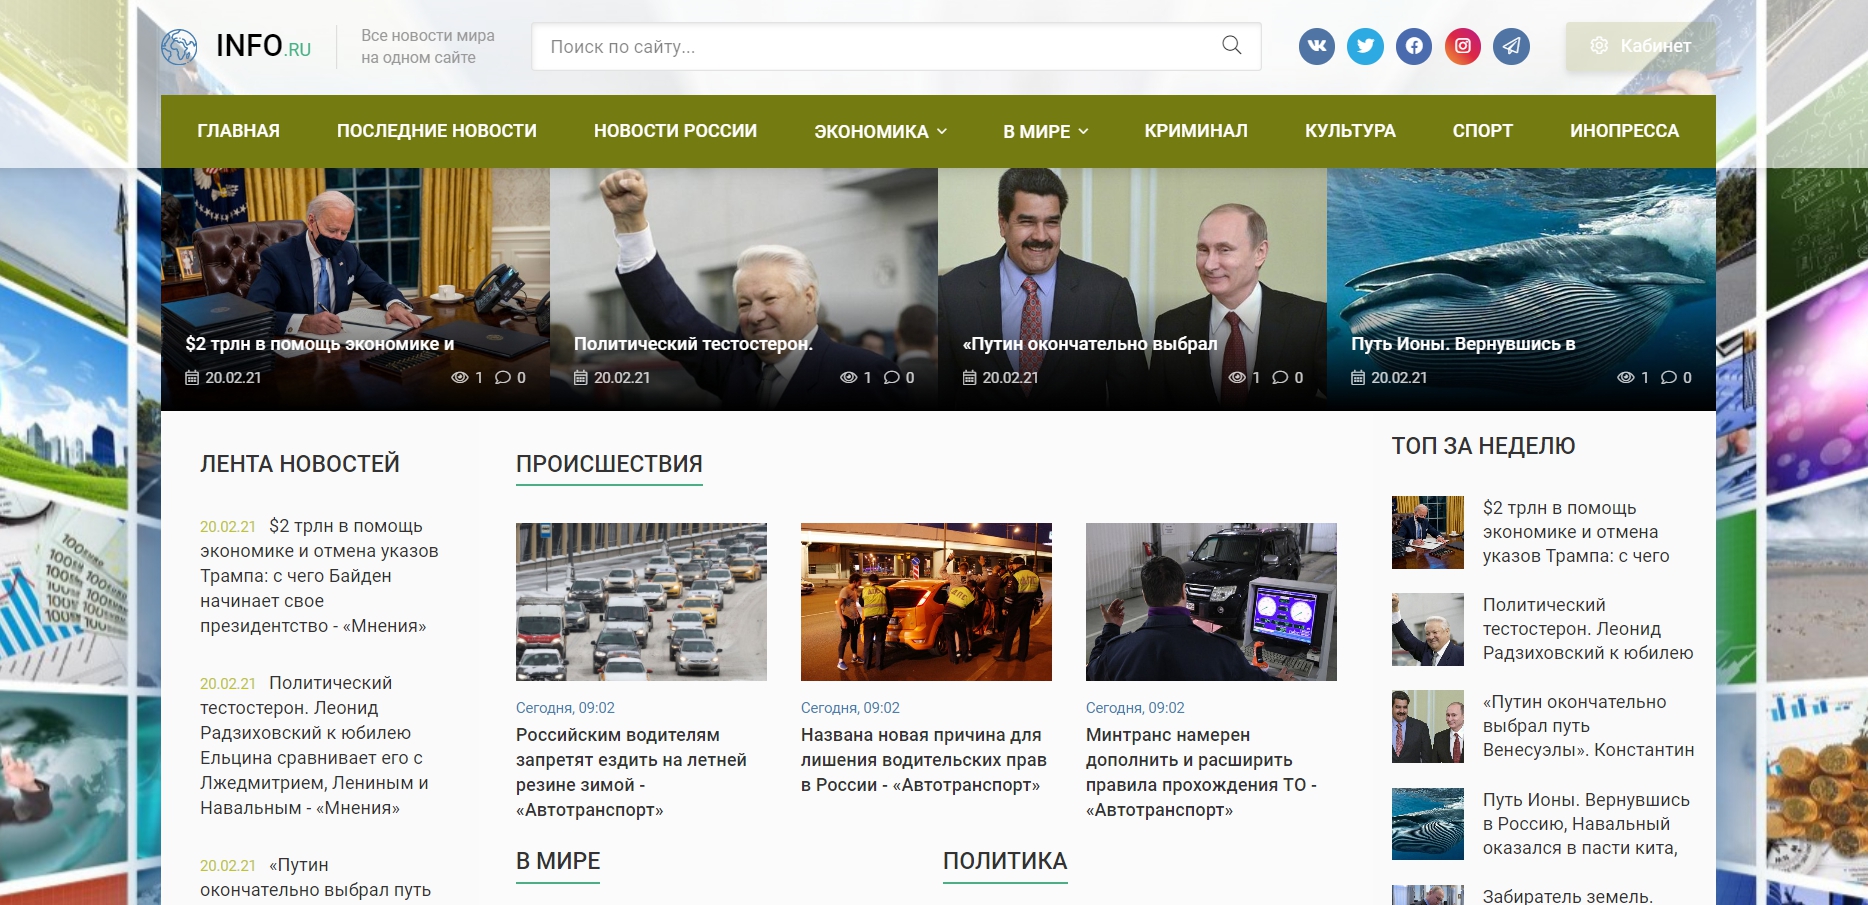 info-2019.ru - »нформационное агентство